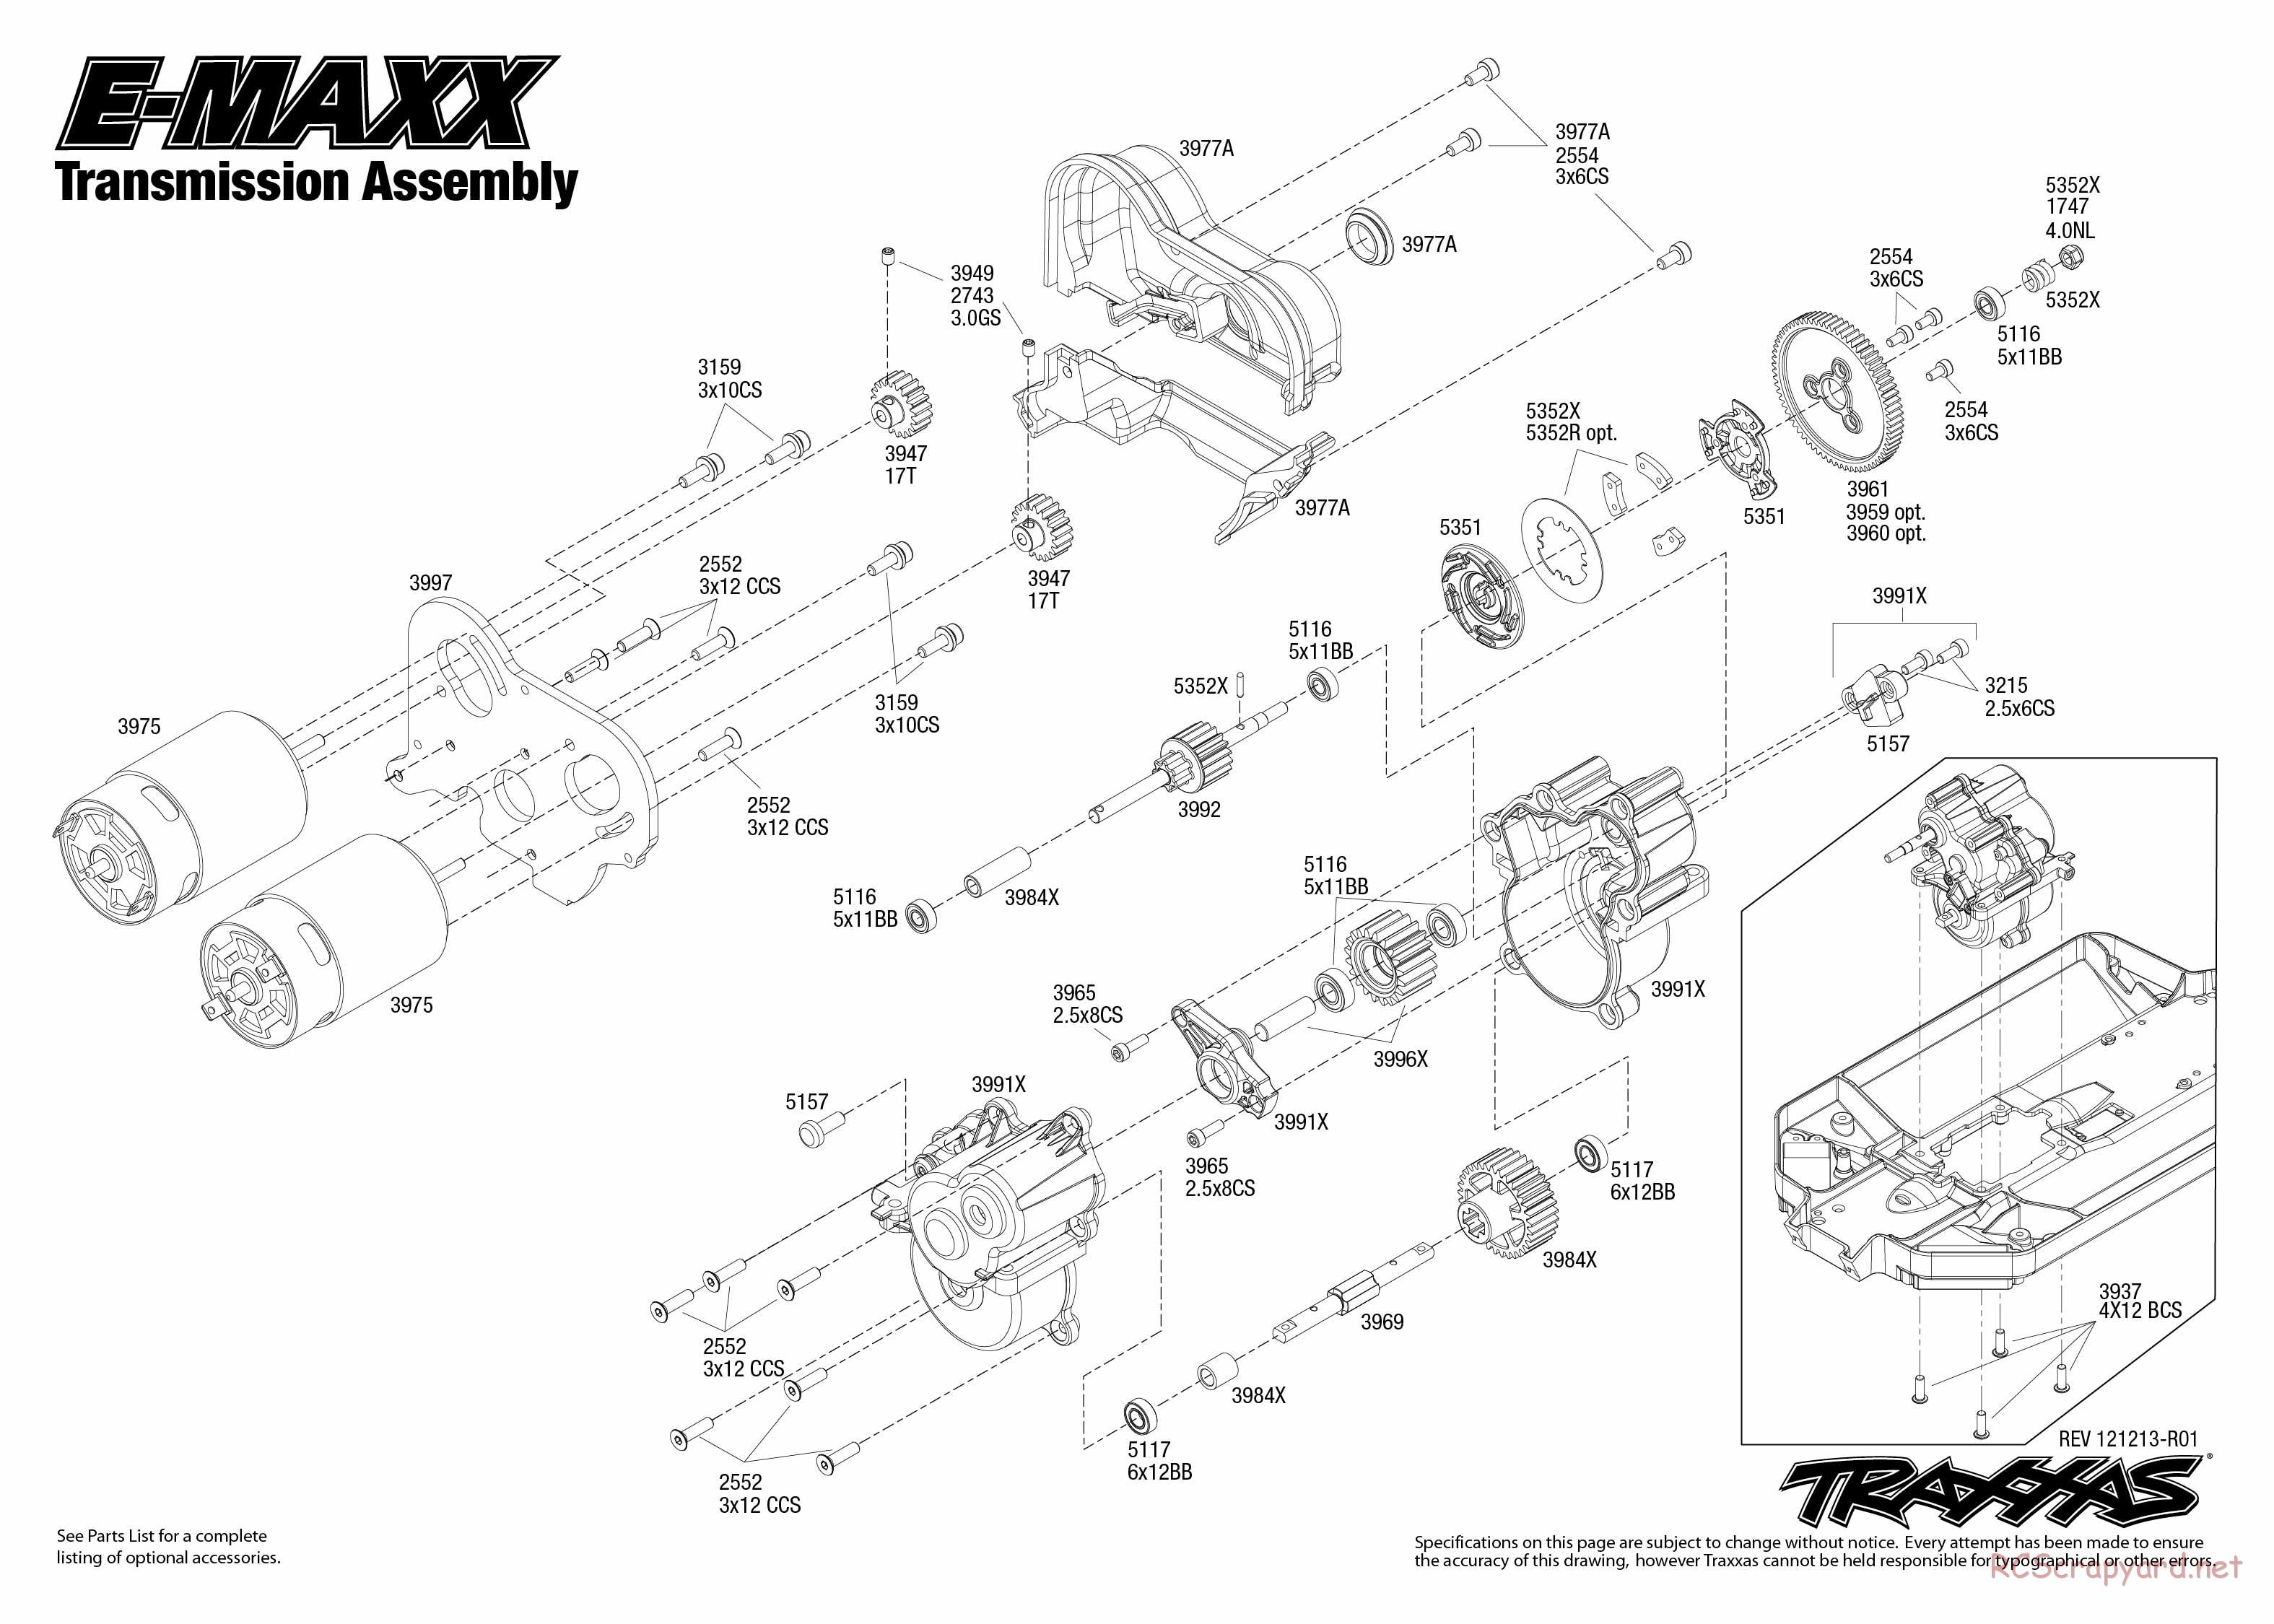 Traxxas - E-Maxx (2010) - Exploded Views - Page 5